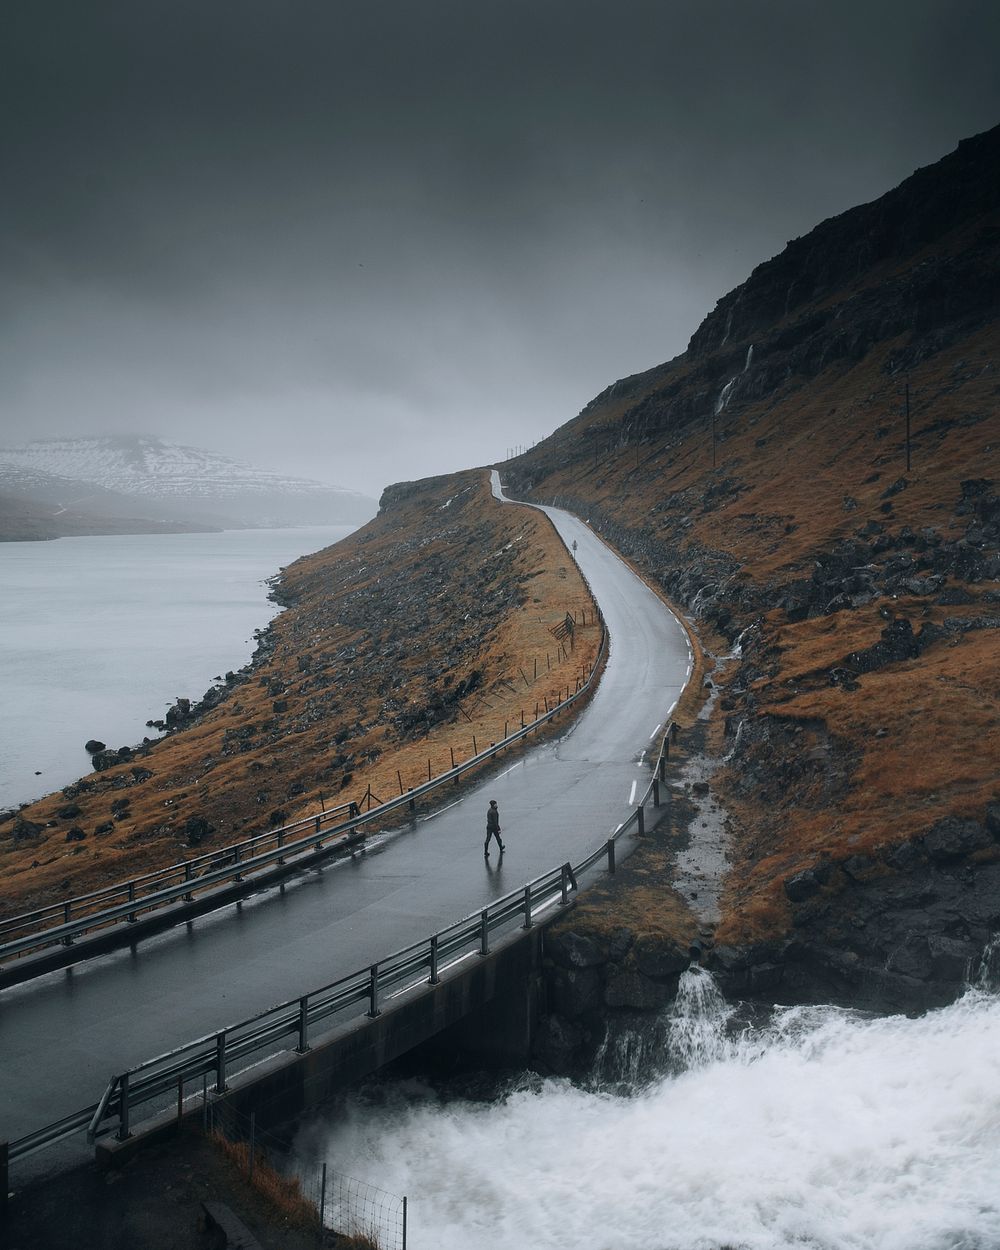 Scenic freeway by the lake on Faroe Islands